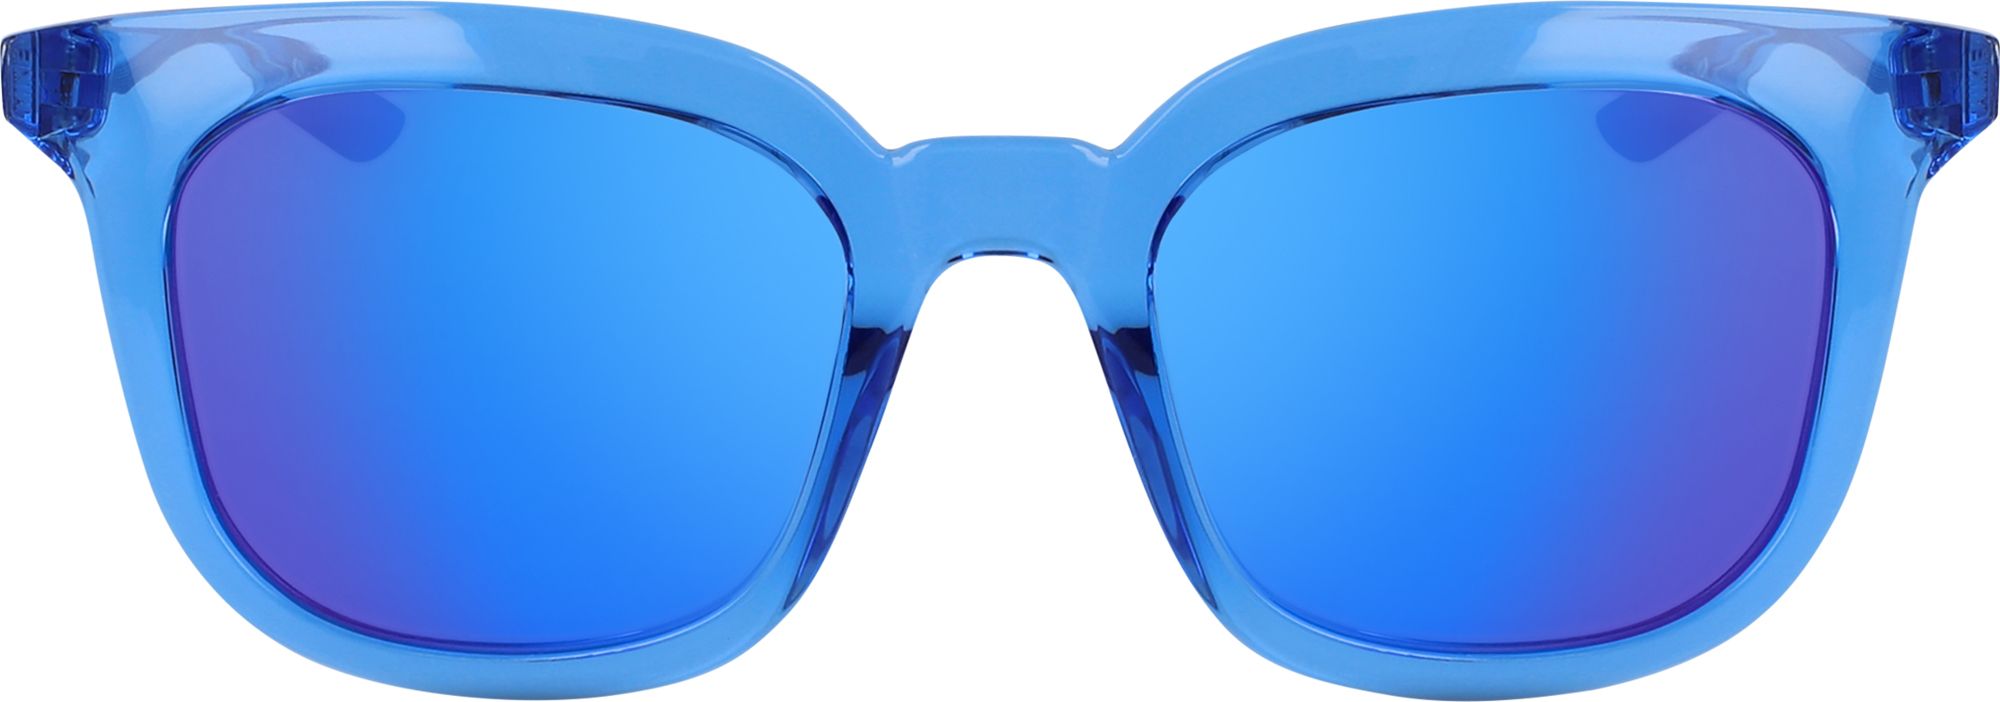 blue nike sunglasses